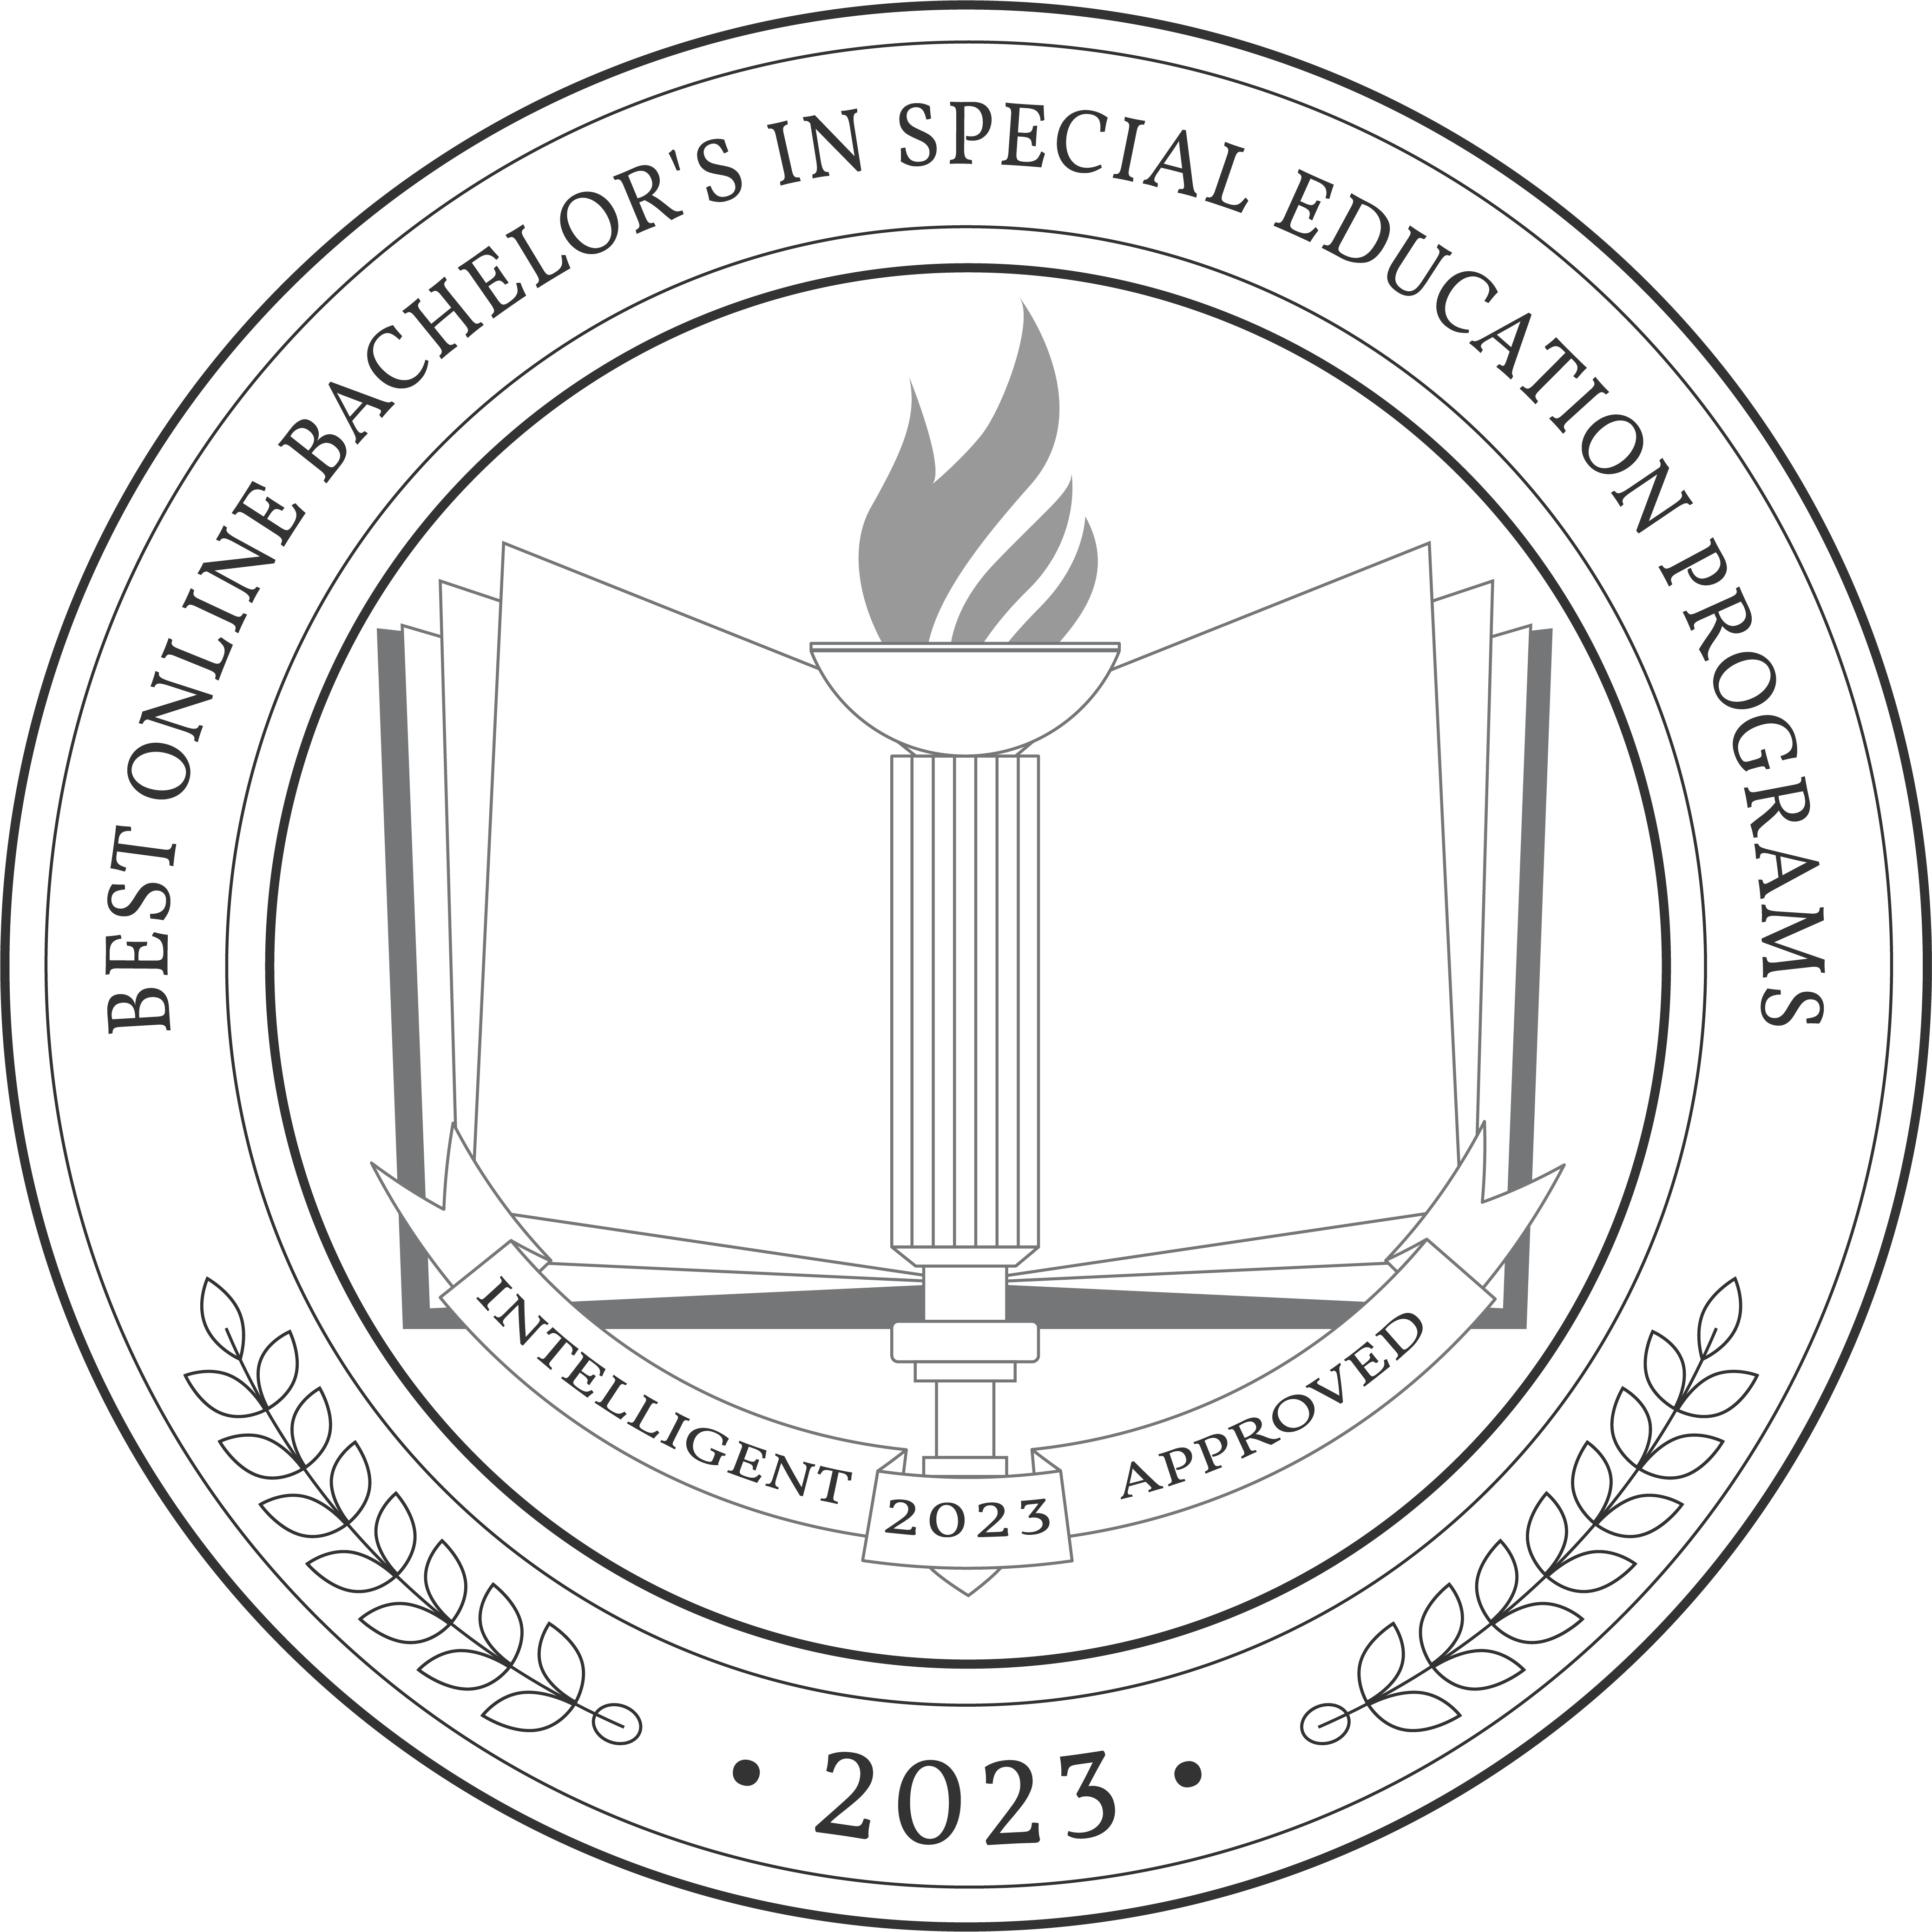 Best Online Bachelor's in Special Education Programs badge